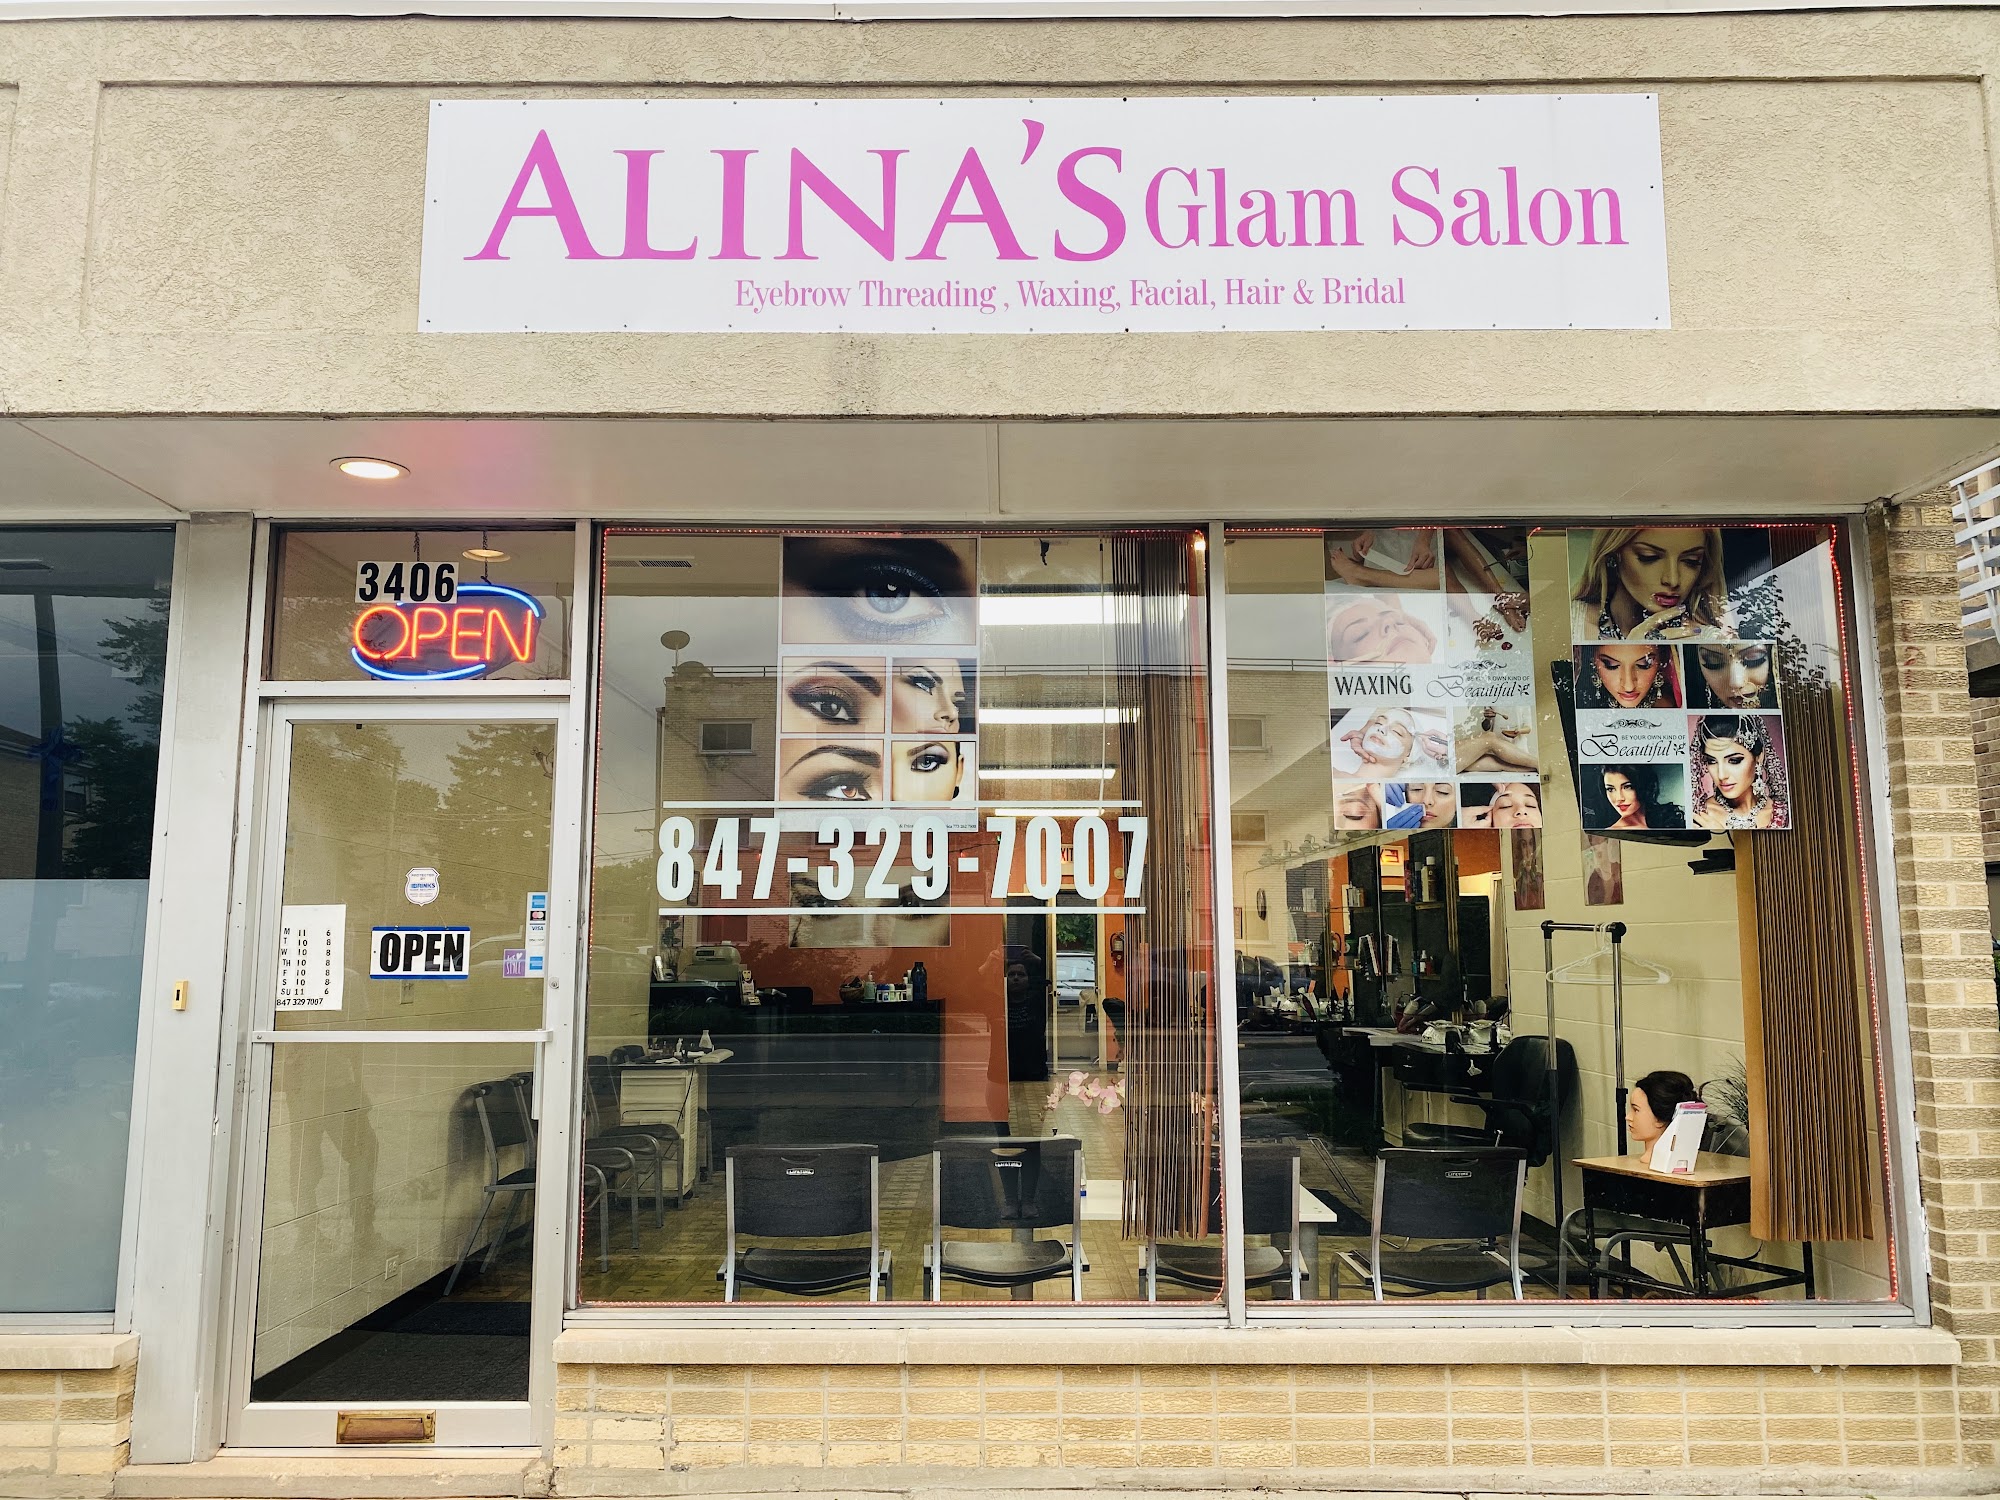 Alina's Glam Salon